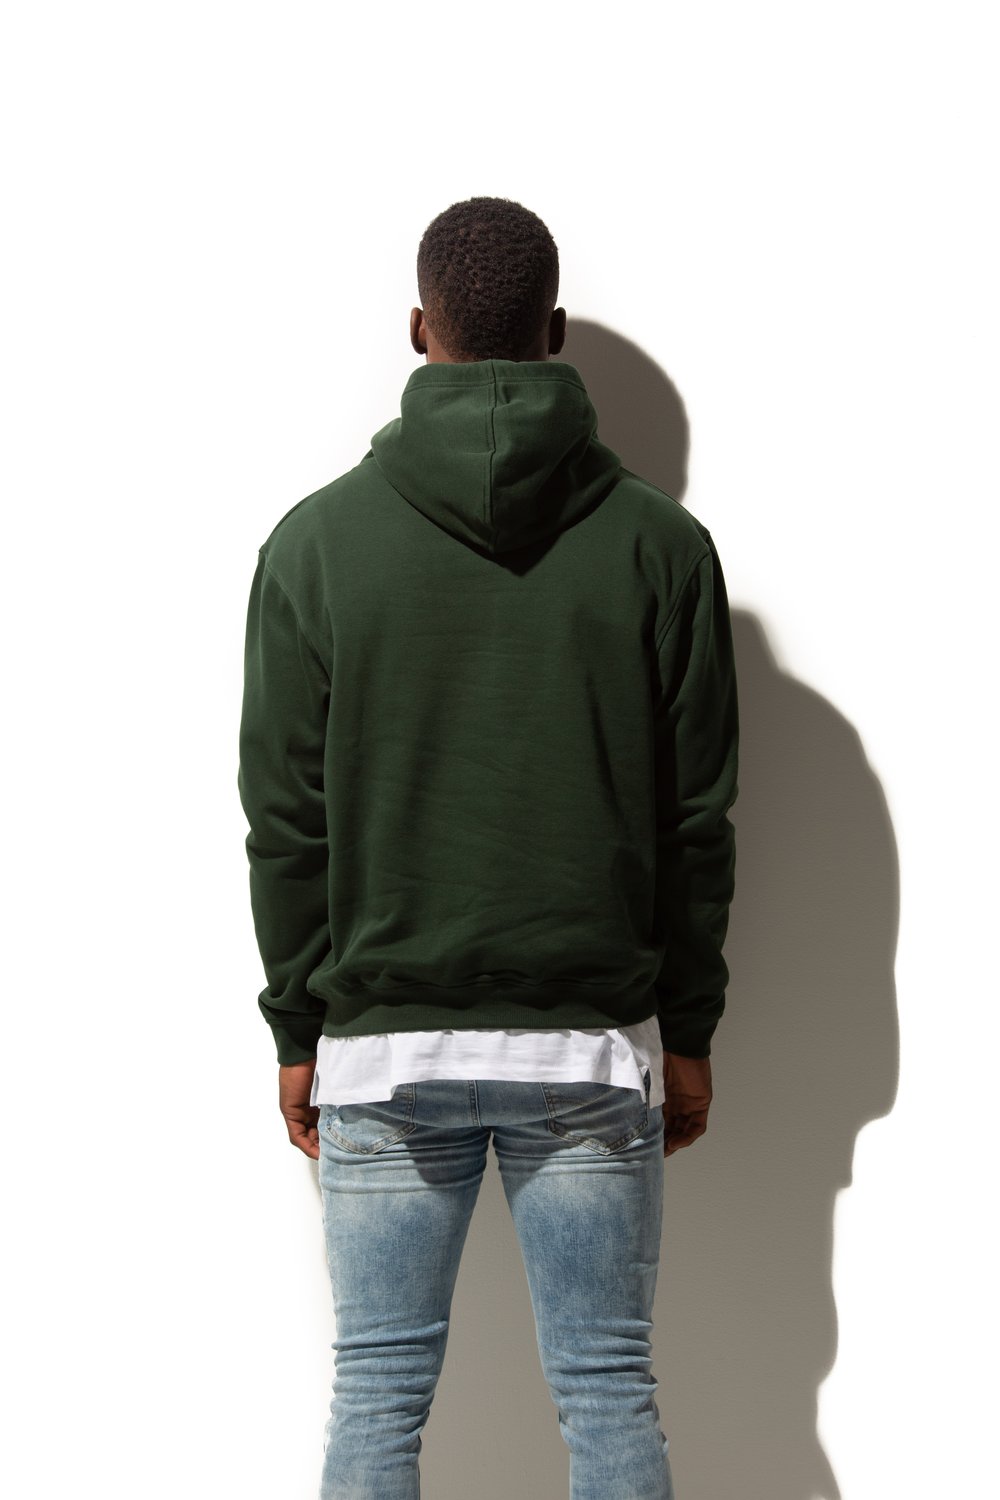 Forest Green Pullover Premium Unisex Hoody